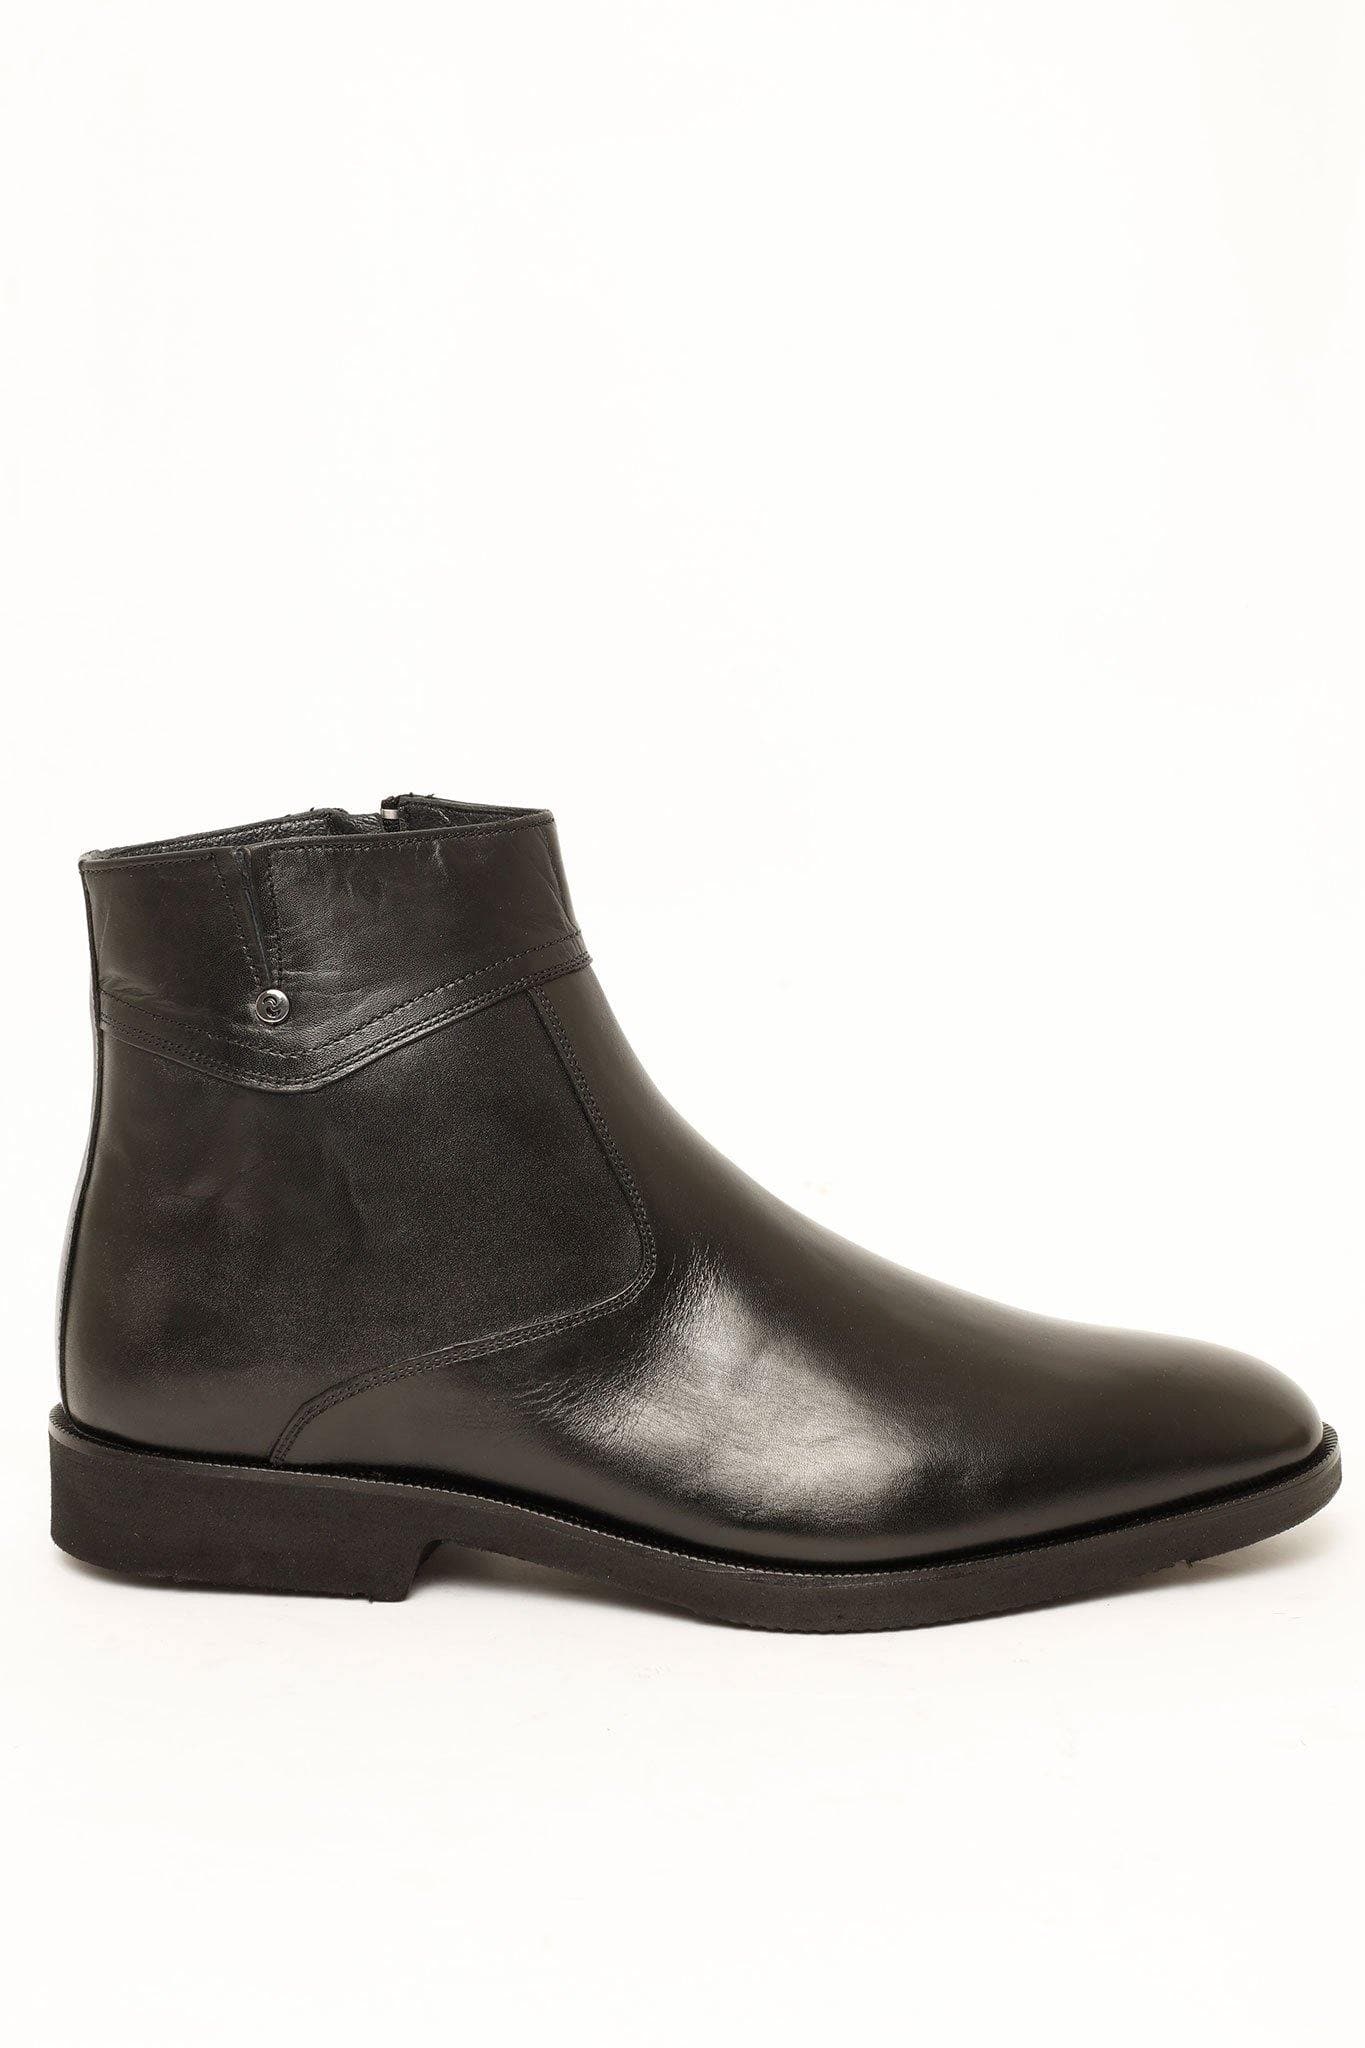 MEN'S BOOTS 1054B, SHOE, CORADO, black, boots, men, shoe, coradomoda, coradomoda.com